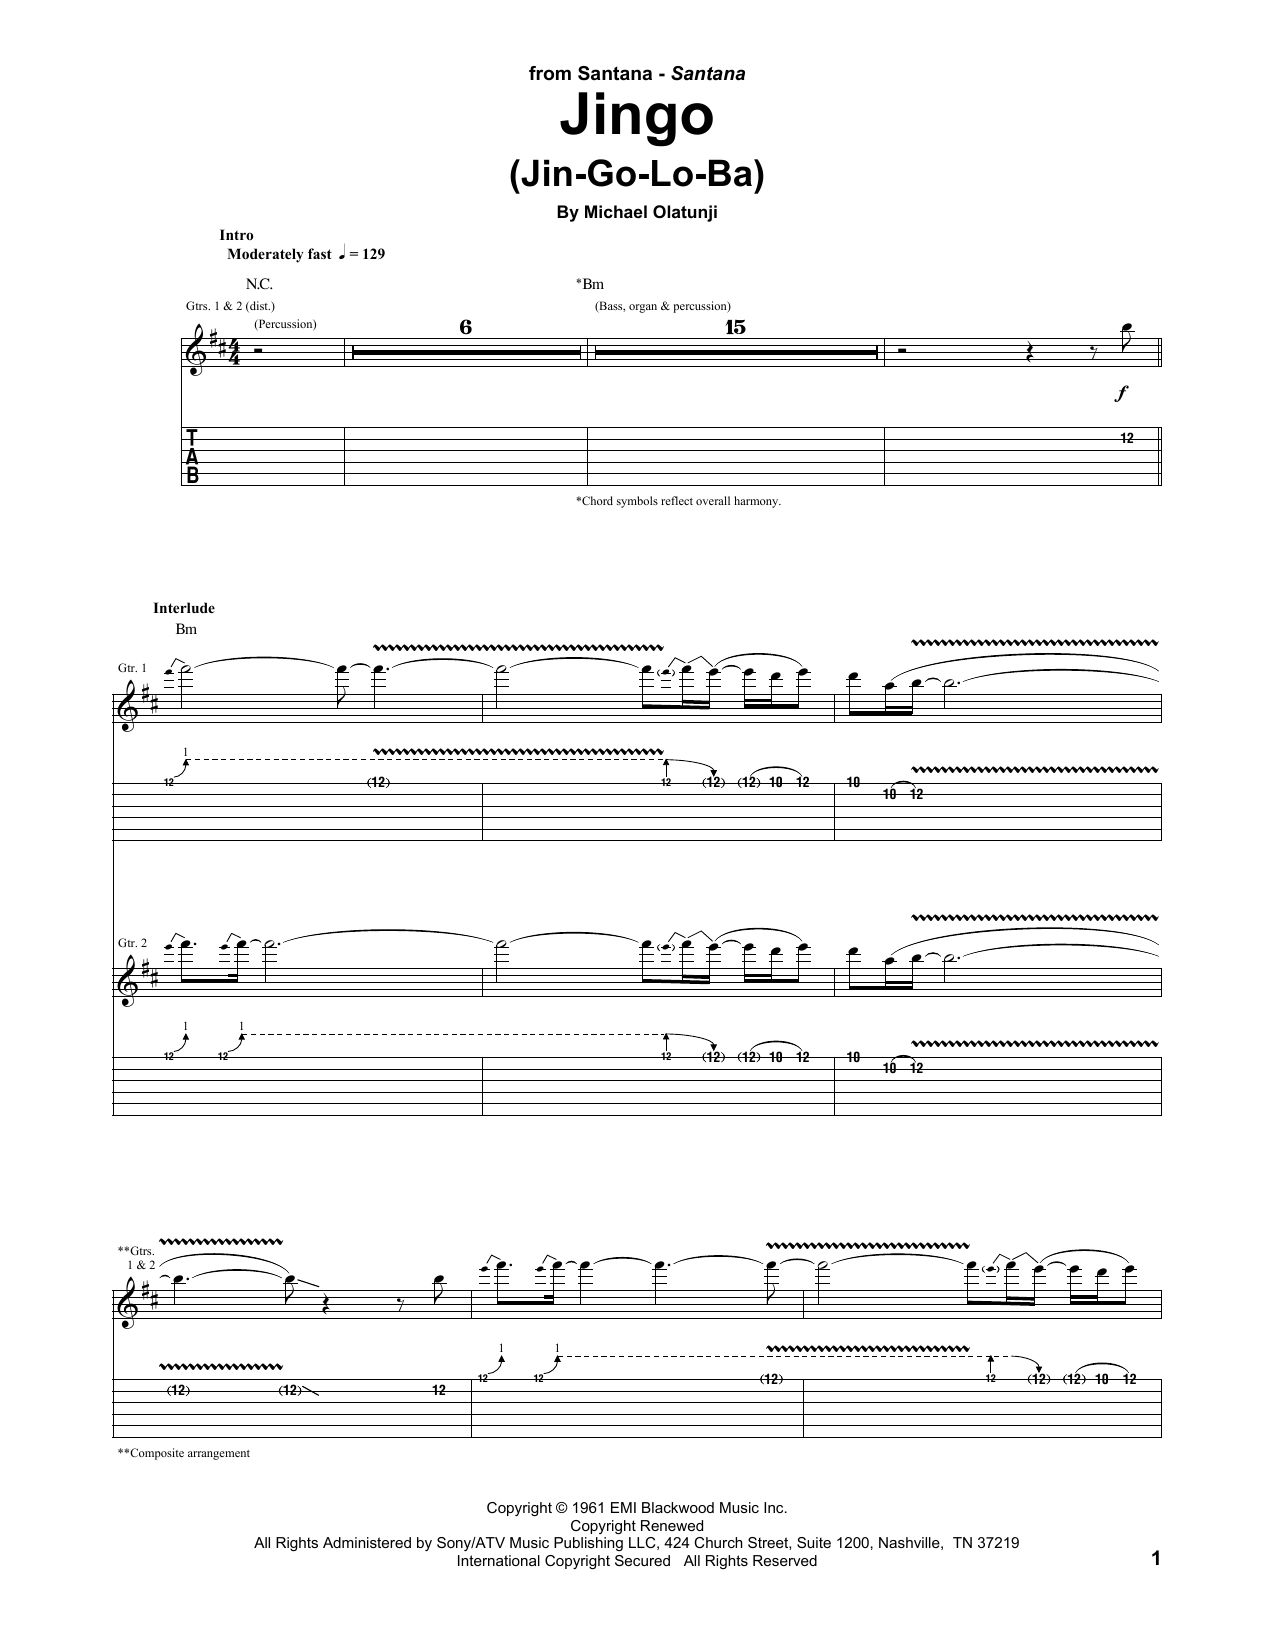 Download Santana Jingo (Jin-Go-Lo-Ba) Sheet Music and learn how to play Guitar Tab PDF digital score in minutes